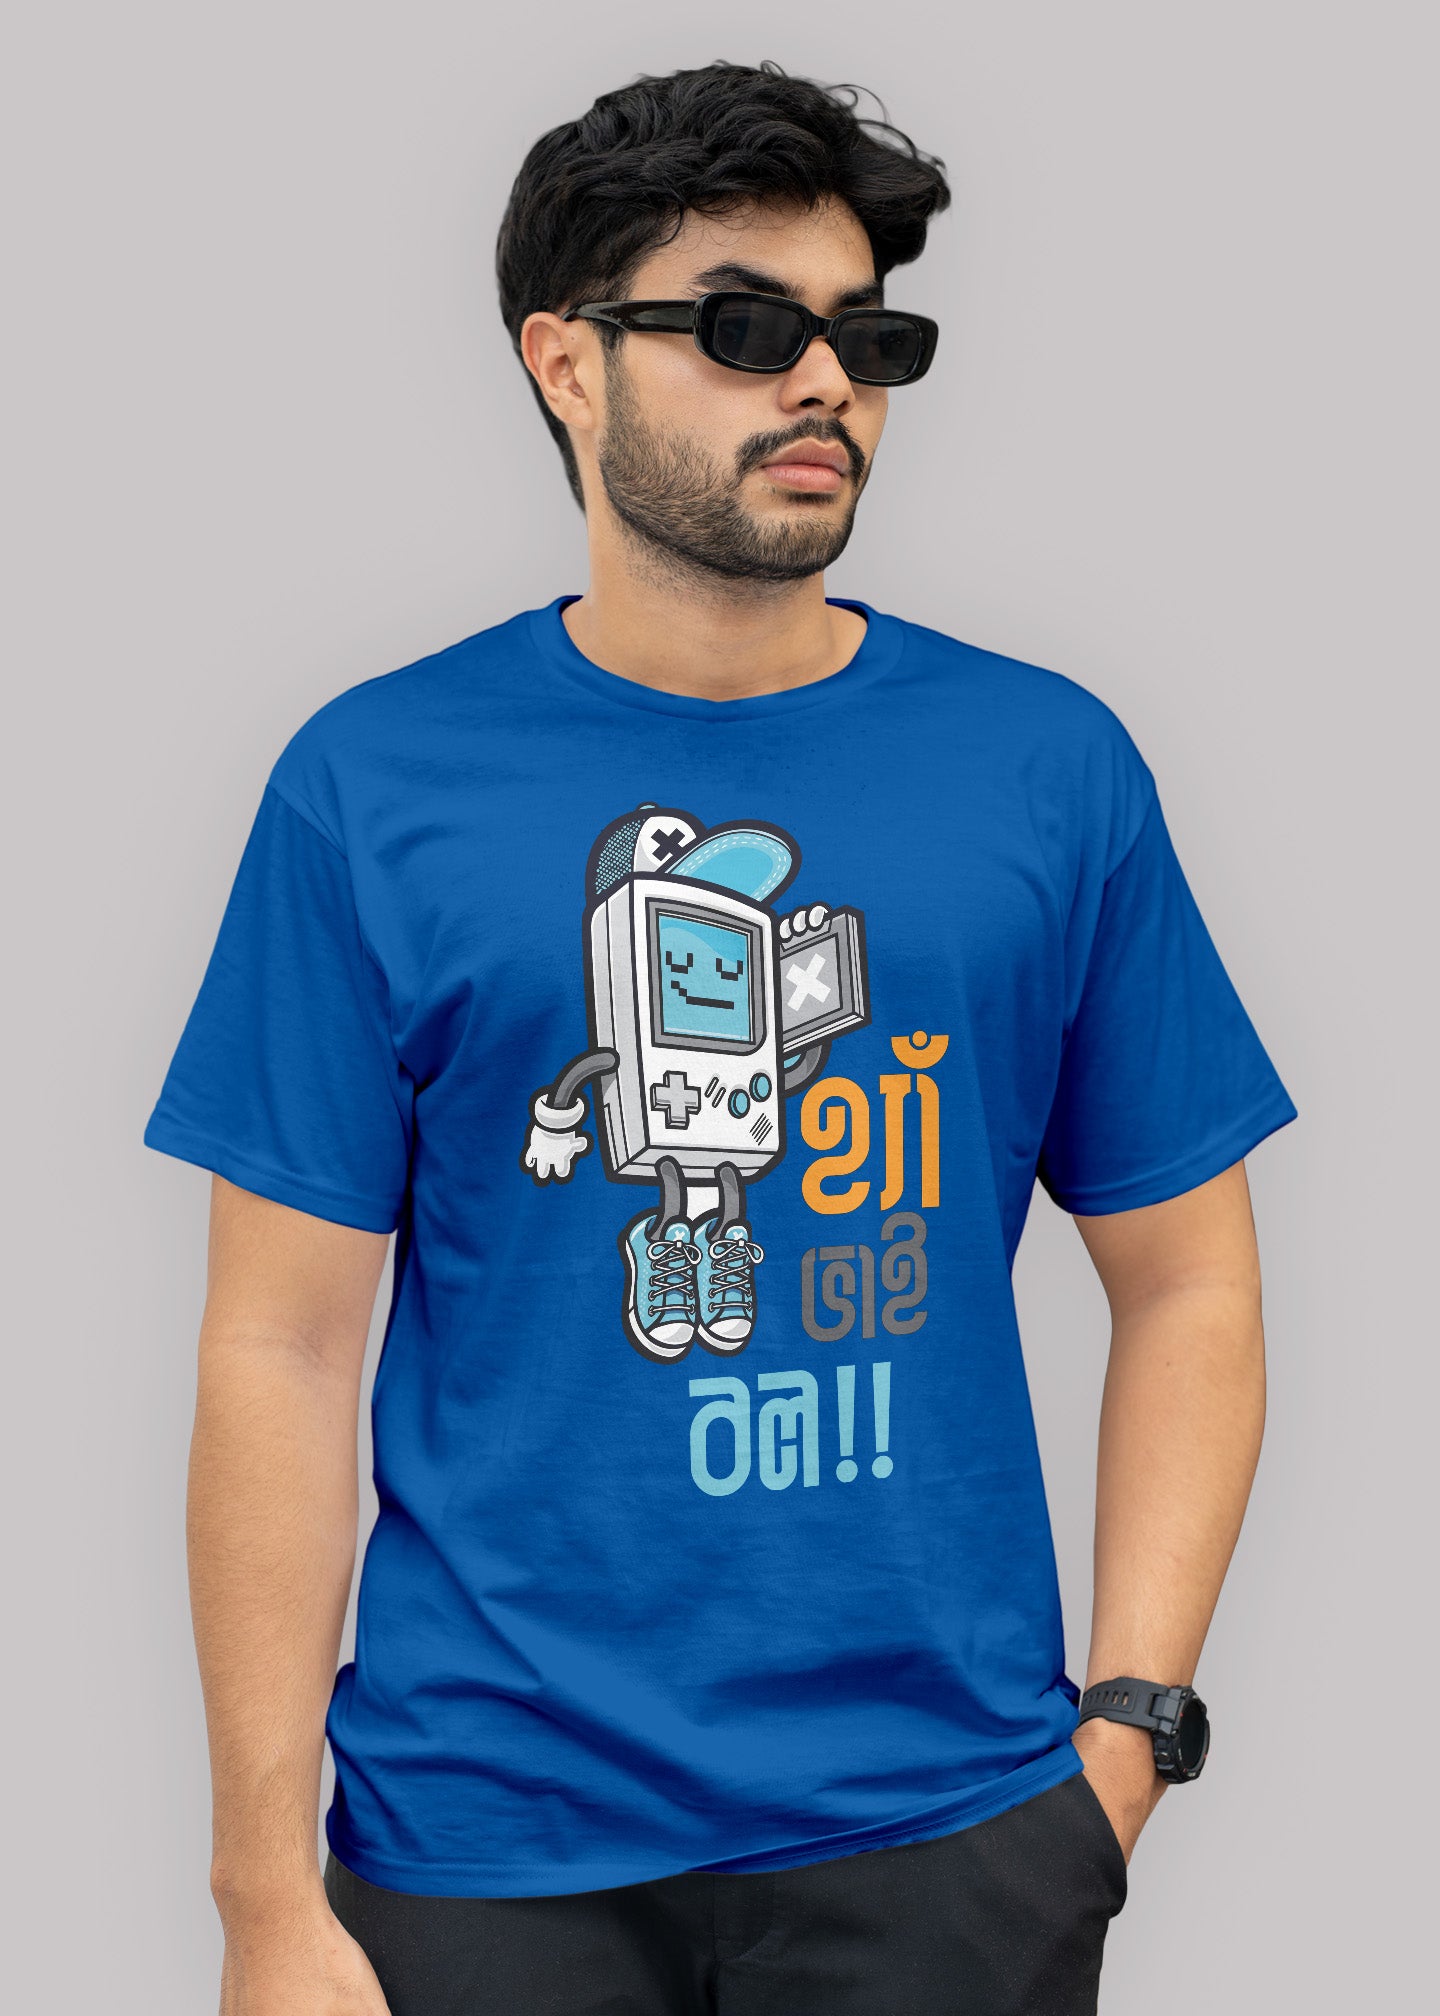 Haa vai bol bengali Printed Half Sleeve Premium Cotton T-shirt For Men